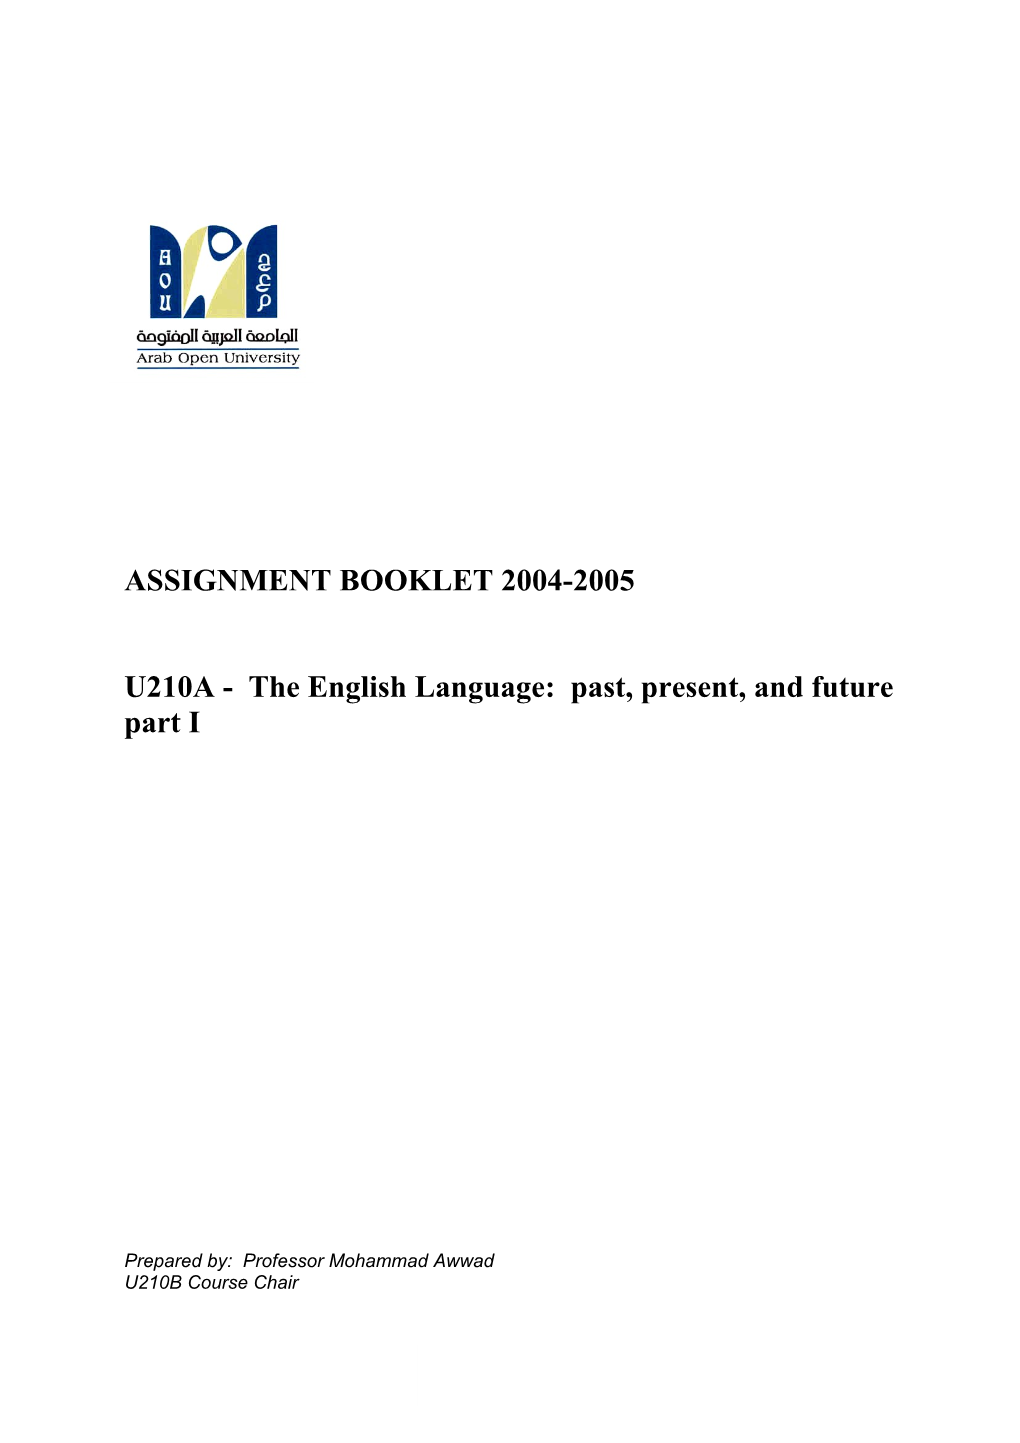 U210A - the English Language: Past, Present, and Future Part I